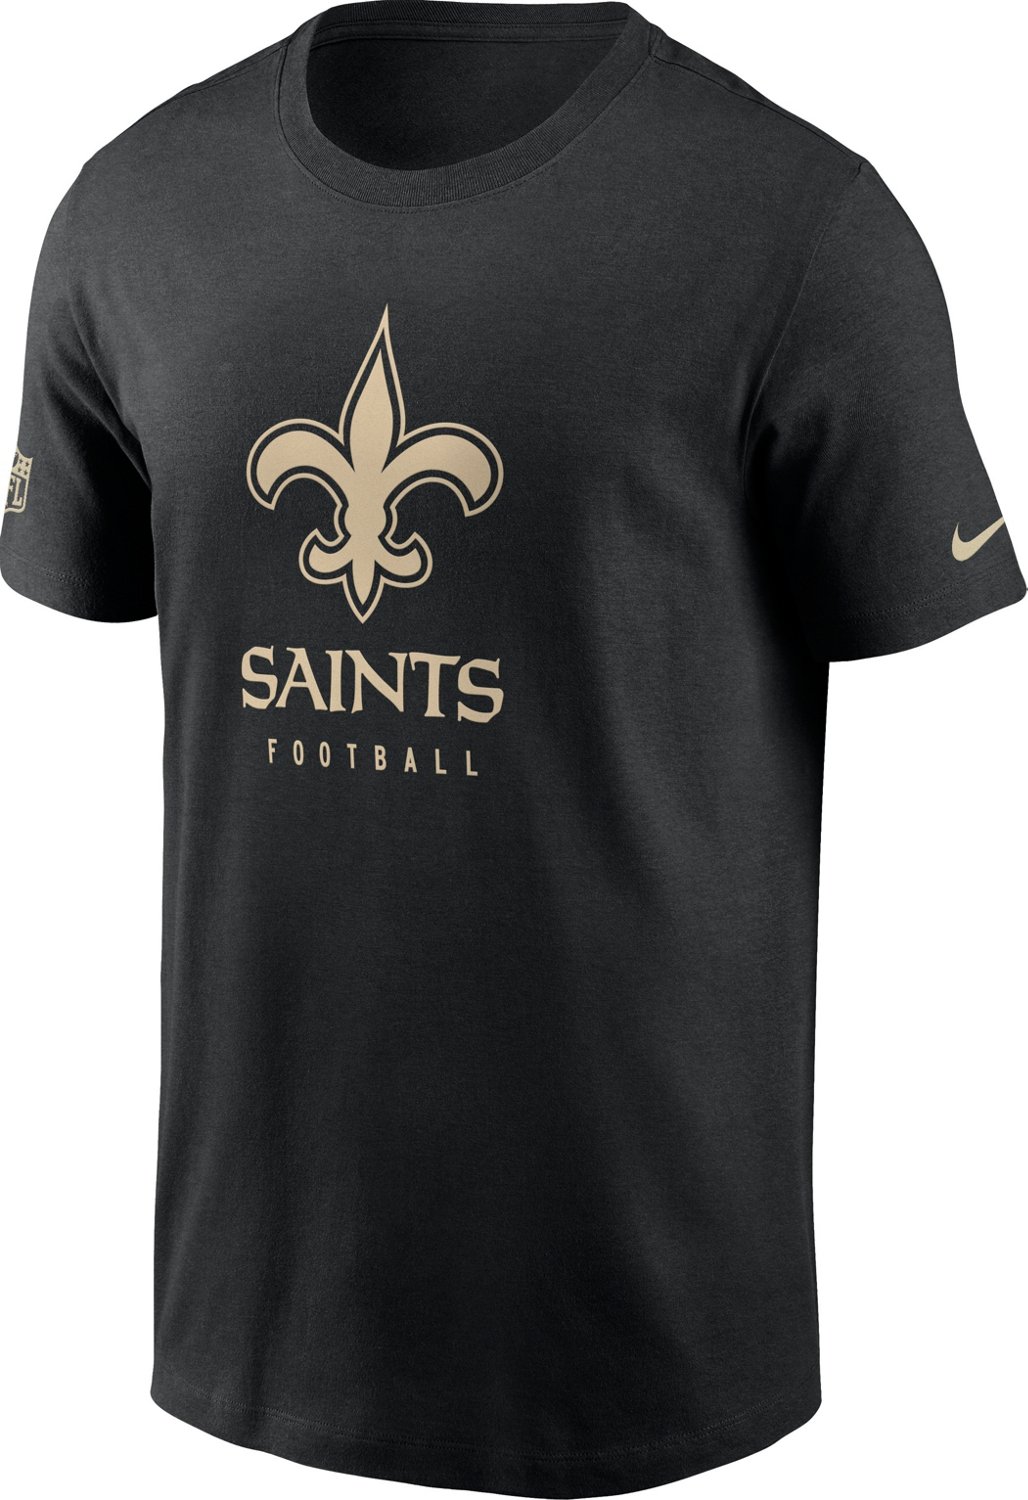 Nike Men's New Orleans Saints Team Issue Dri-FIT T-shirt